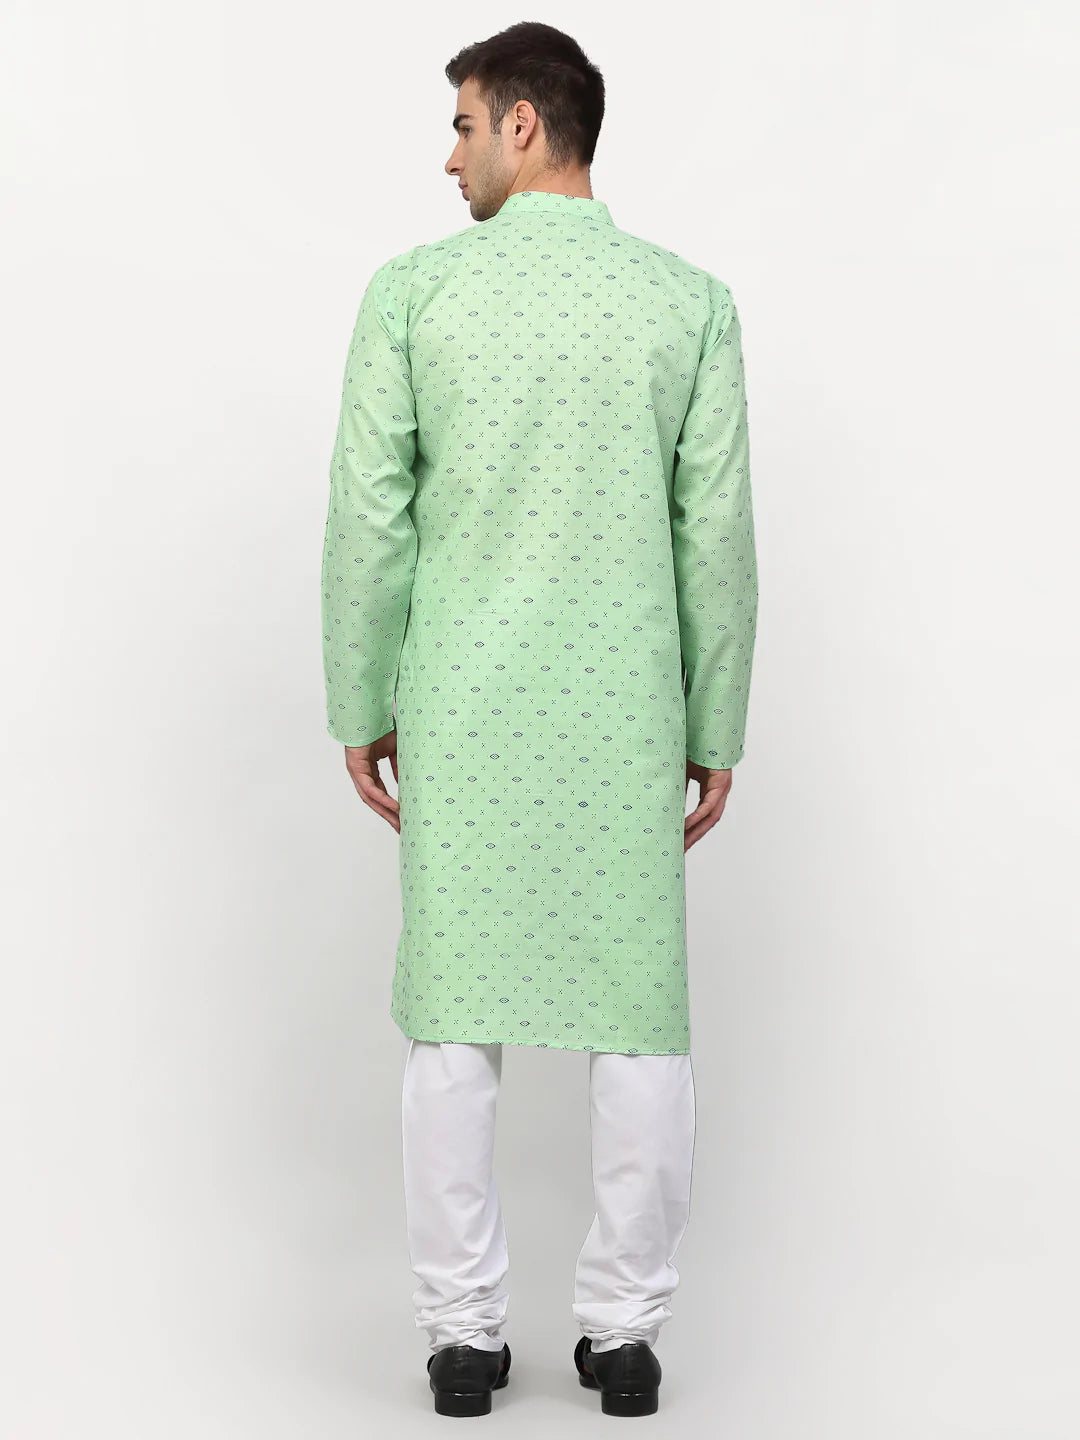 Jompers Men's Green Printed Cotton Kurta Payjama Sets ( JOKP 614 Green )